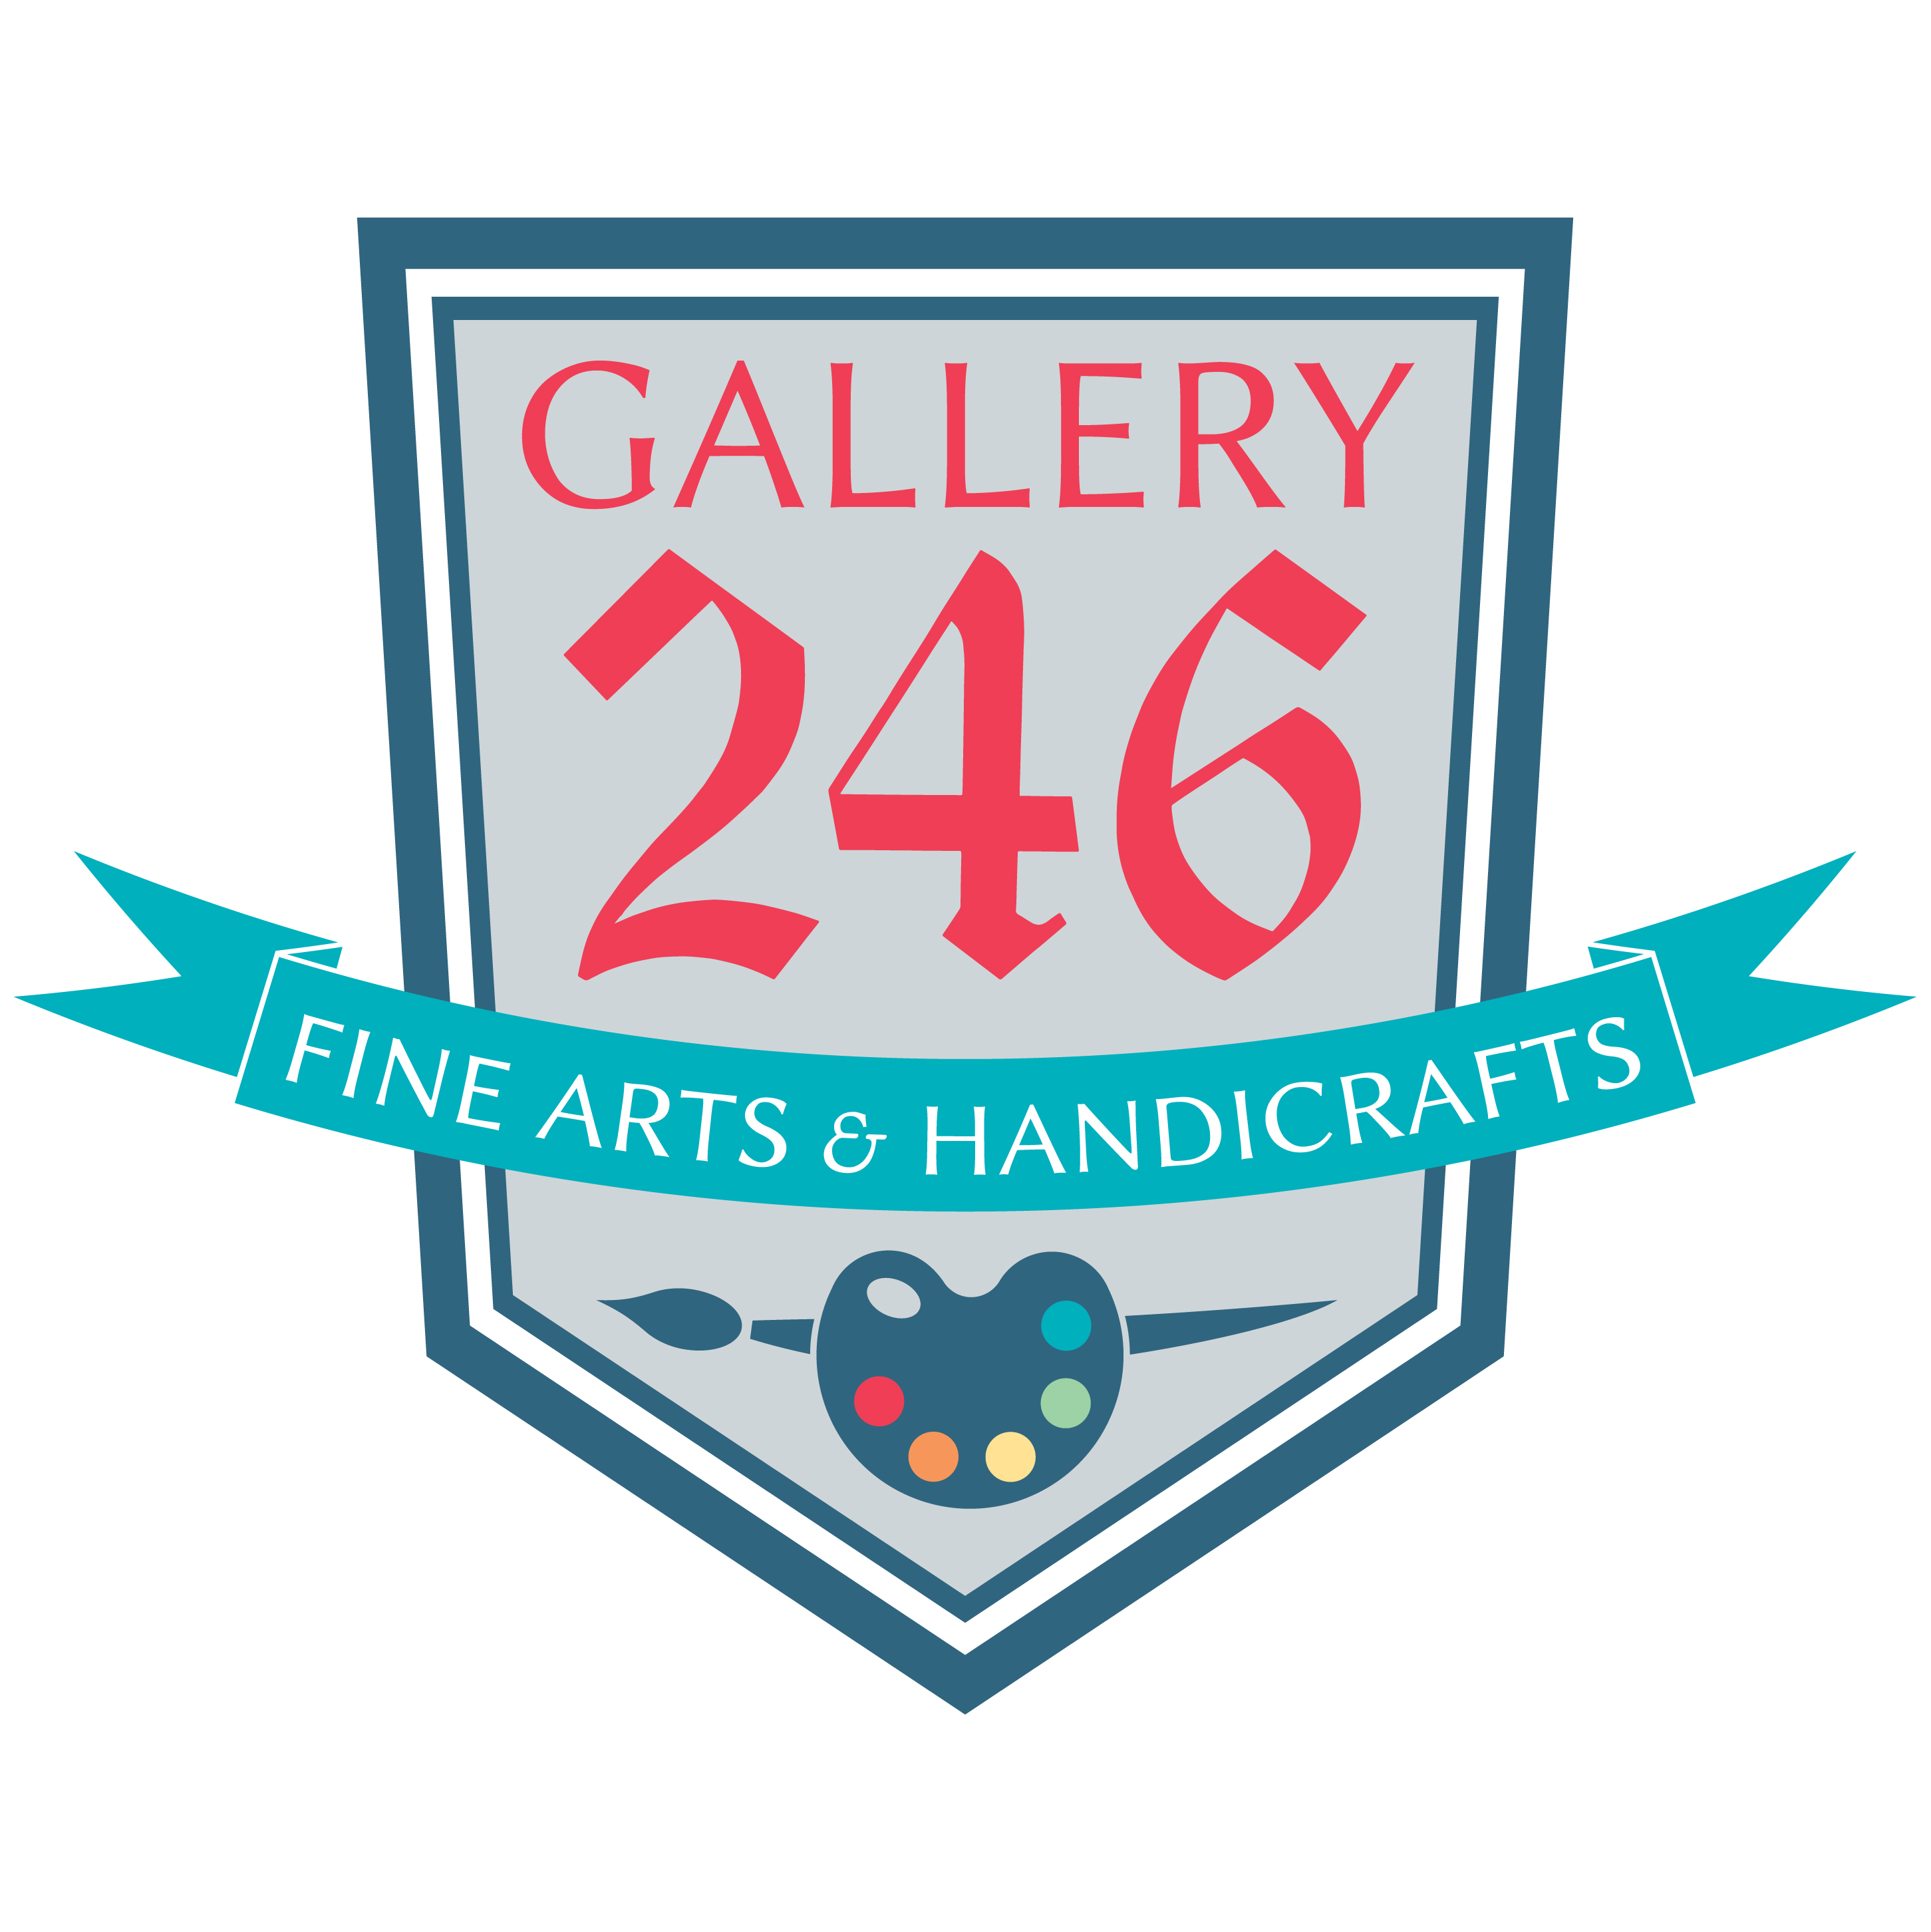 Gallery 246